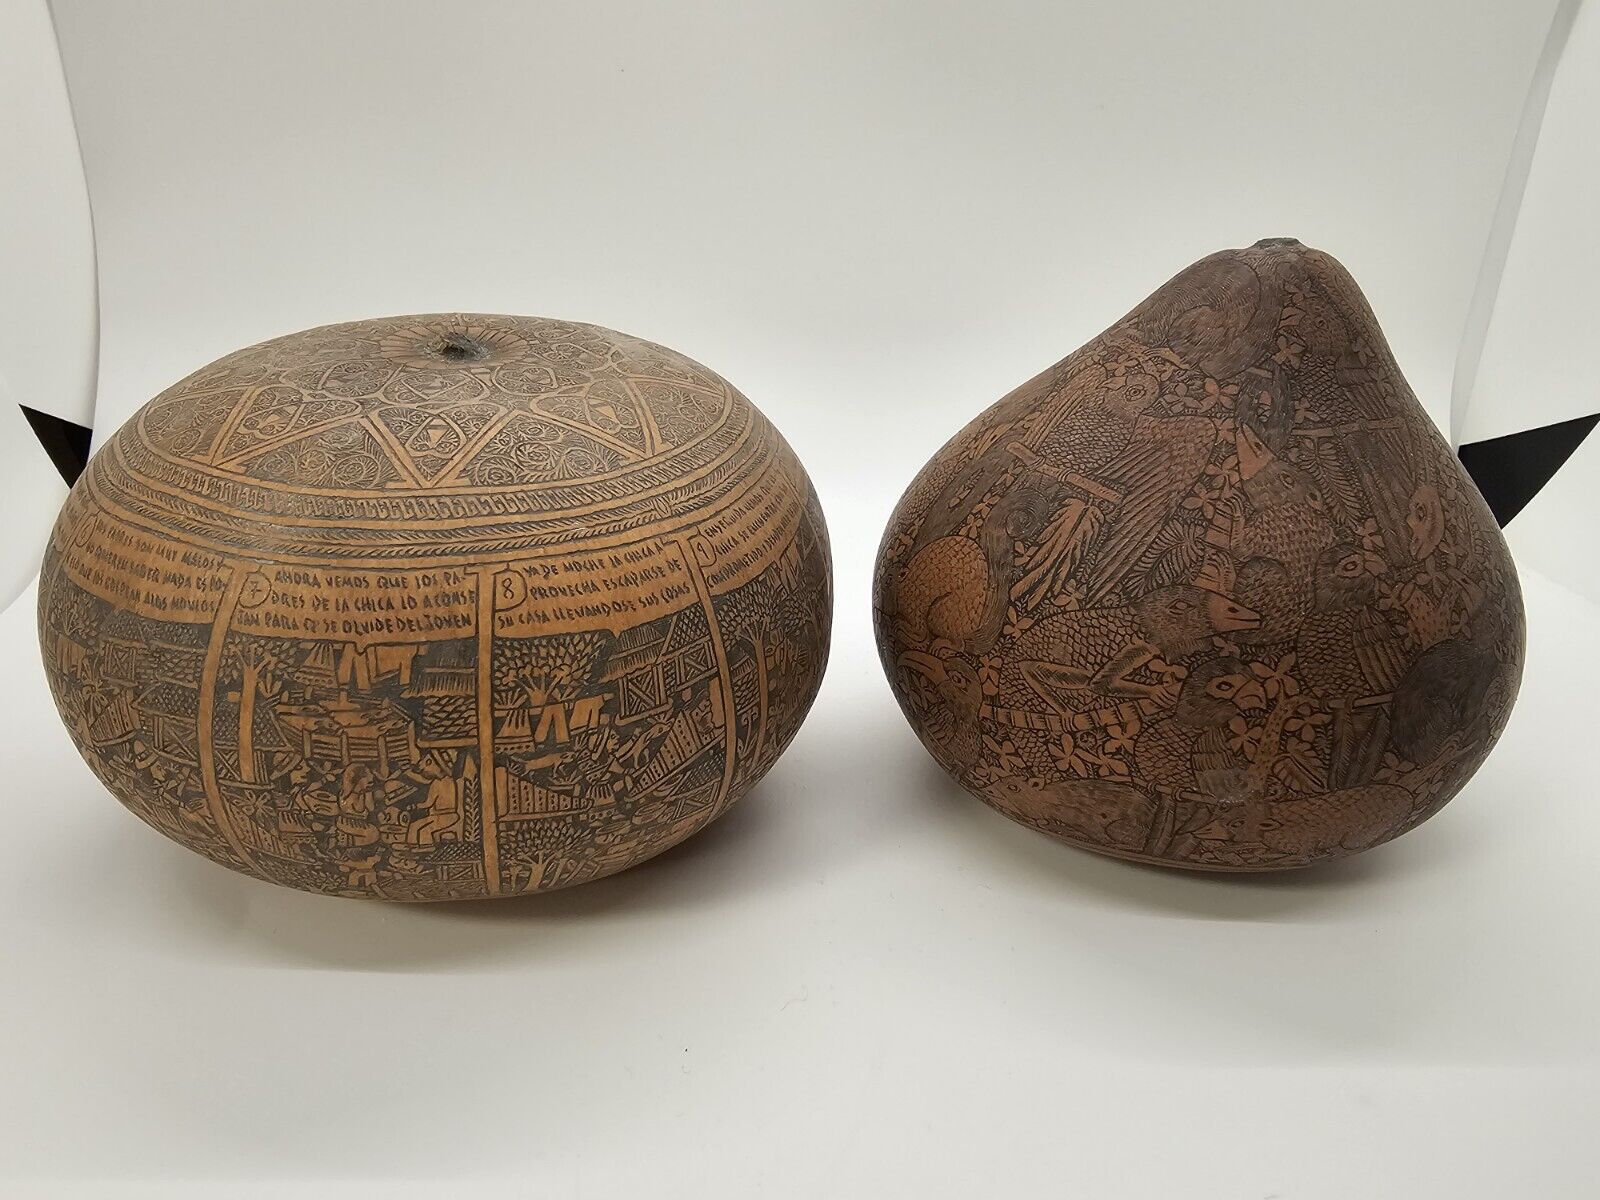 Vtg Peruvian Folk Art Gourd Engraving Very Intricate Apolonia Dorregaray? 